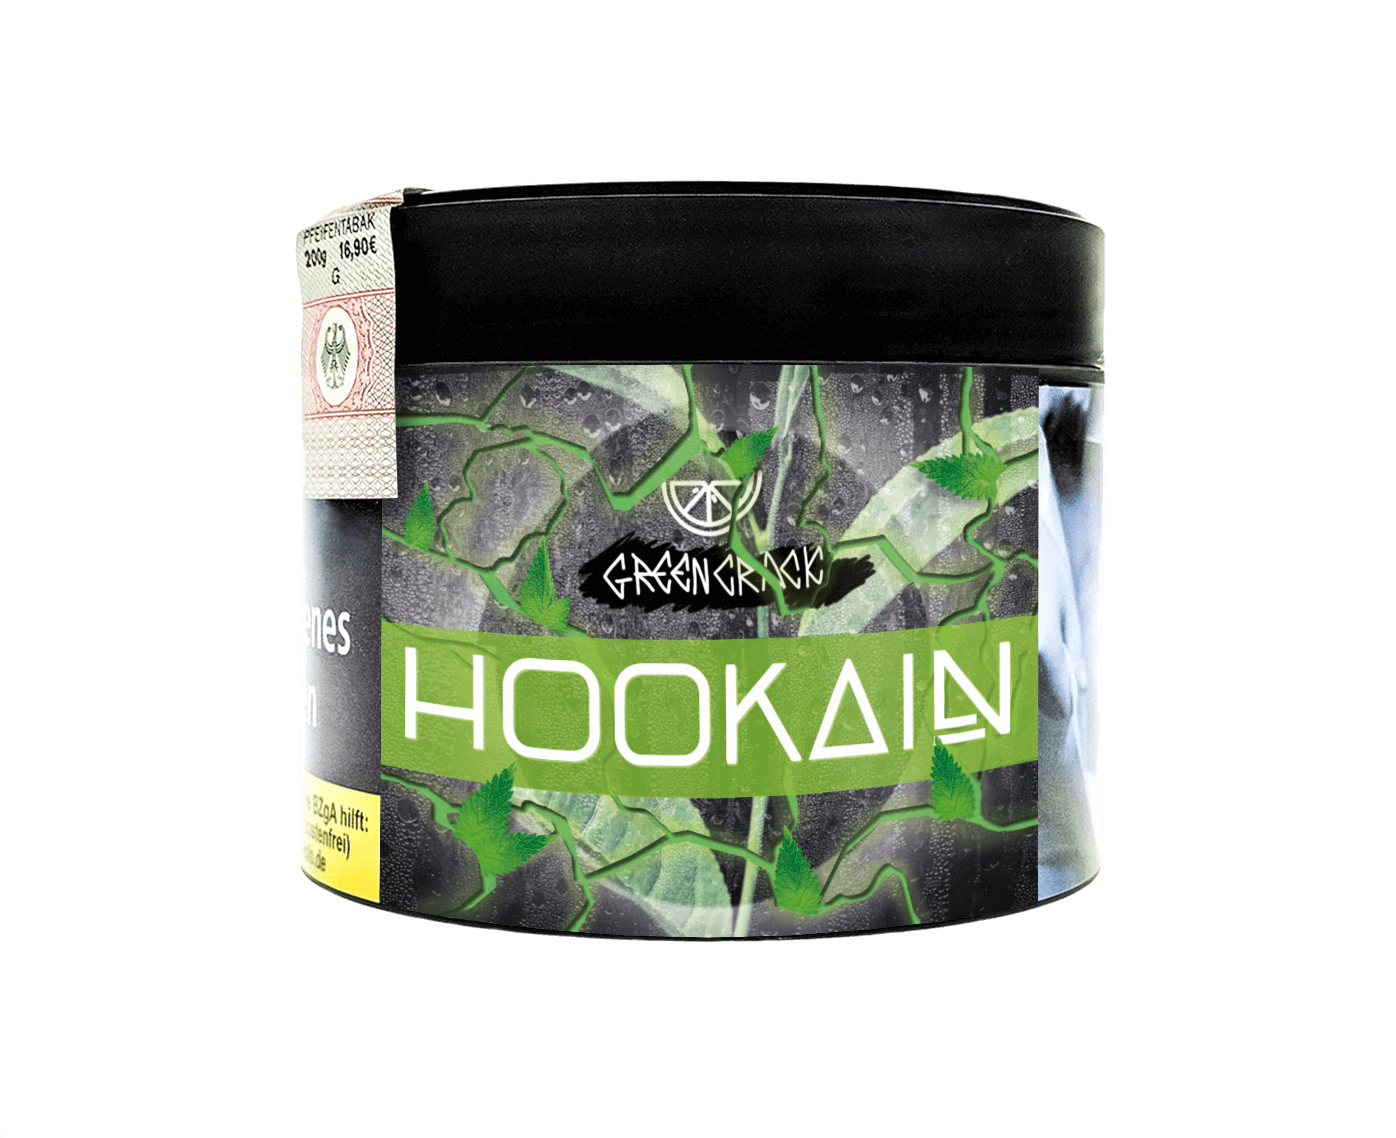 Hookain green crack 200g